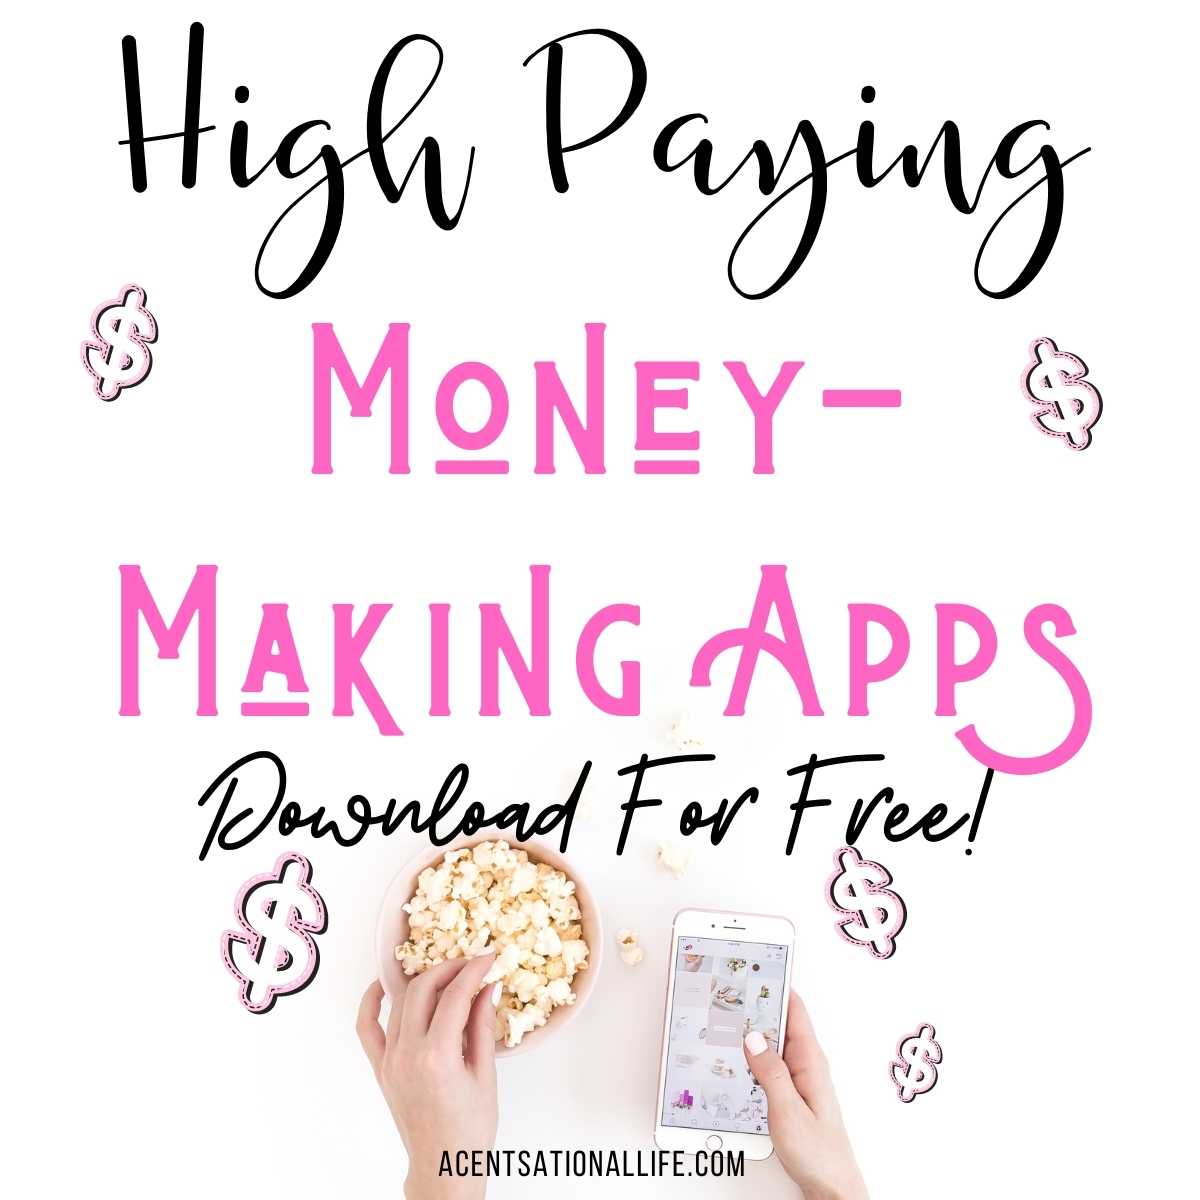 Best Money Making Apps